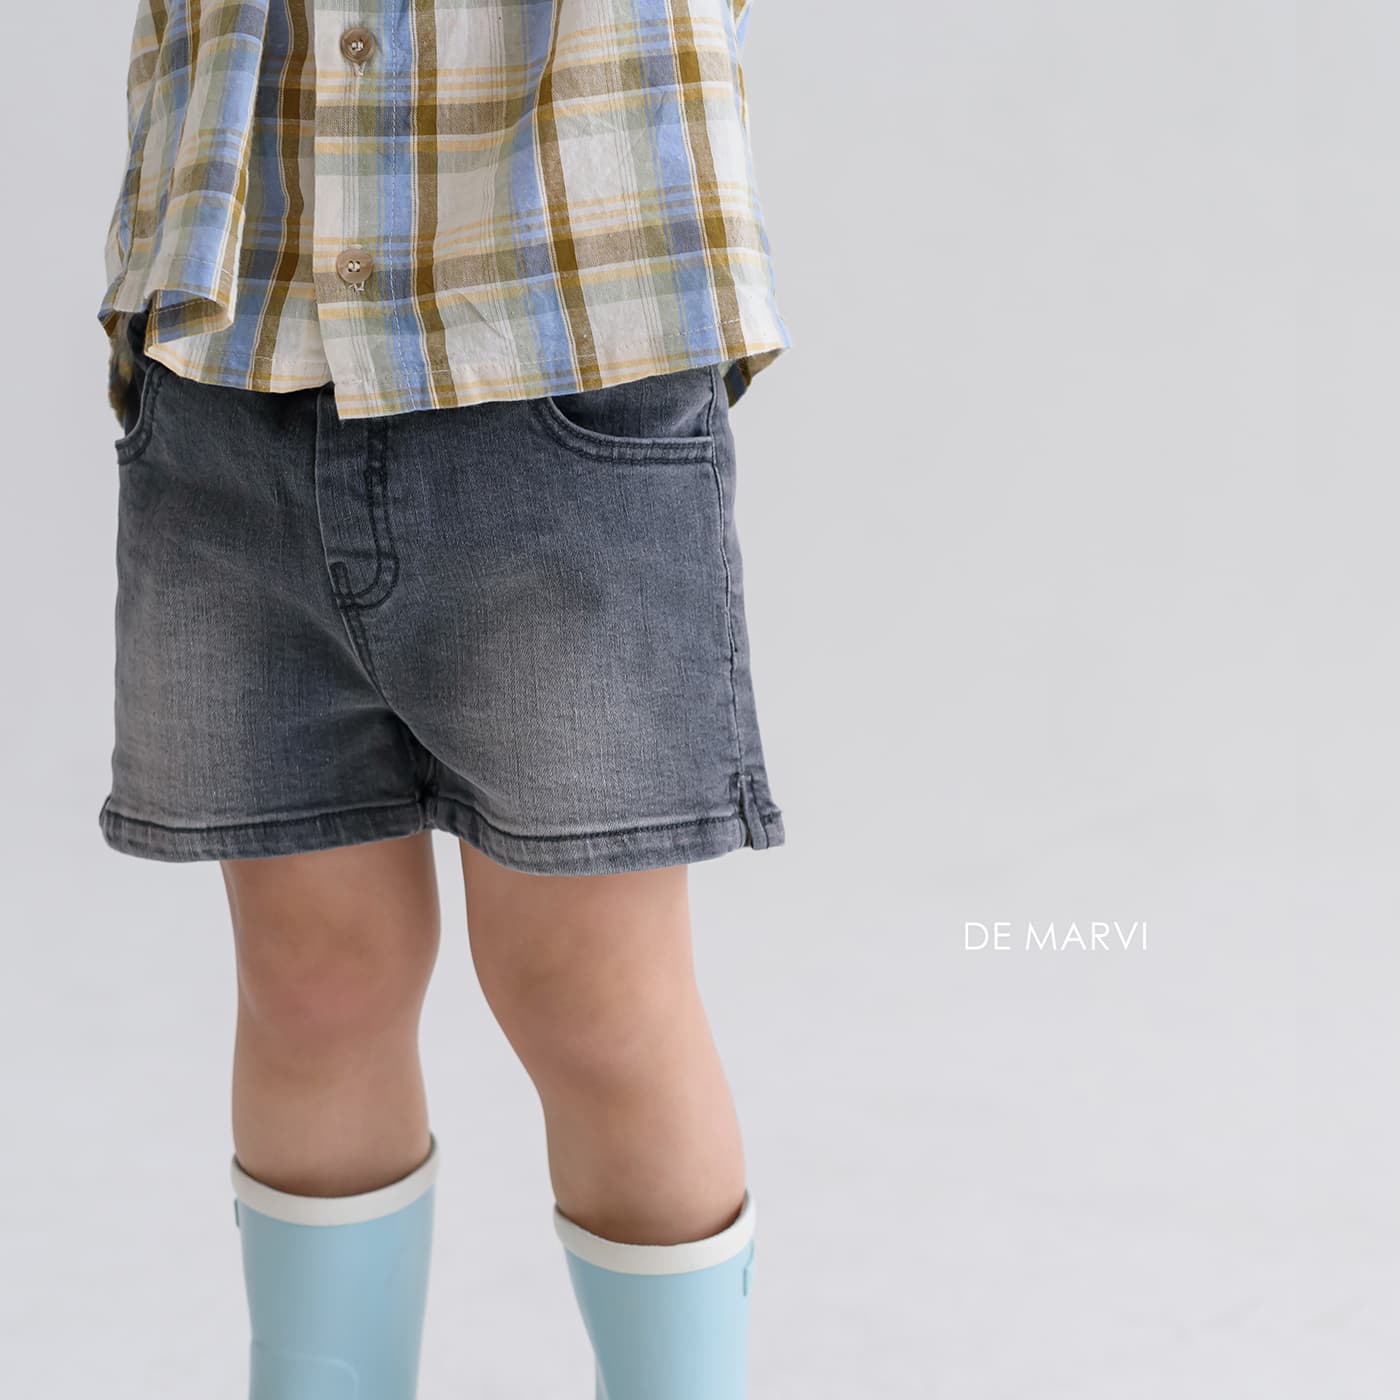 DE MARVI Toddler Kids Elastic Waist Pockets Denim Shorts